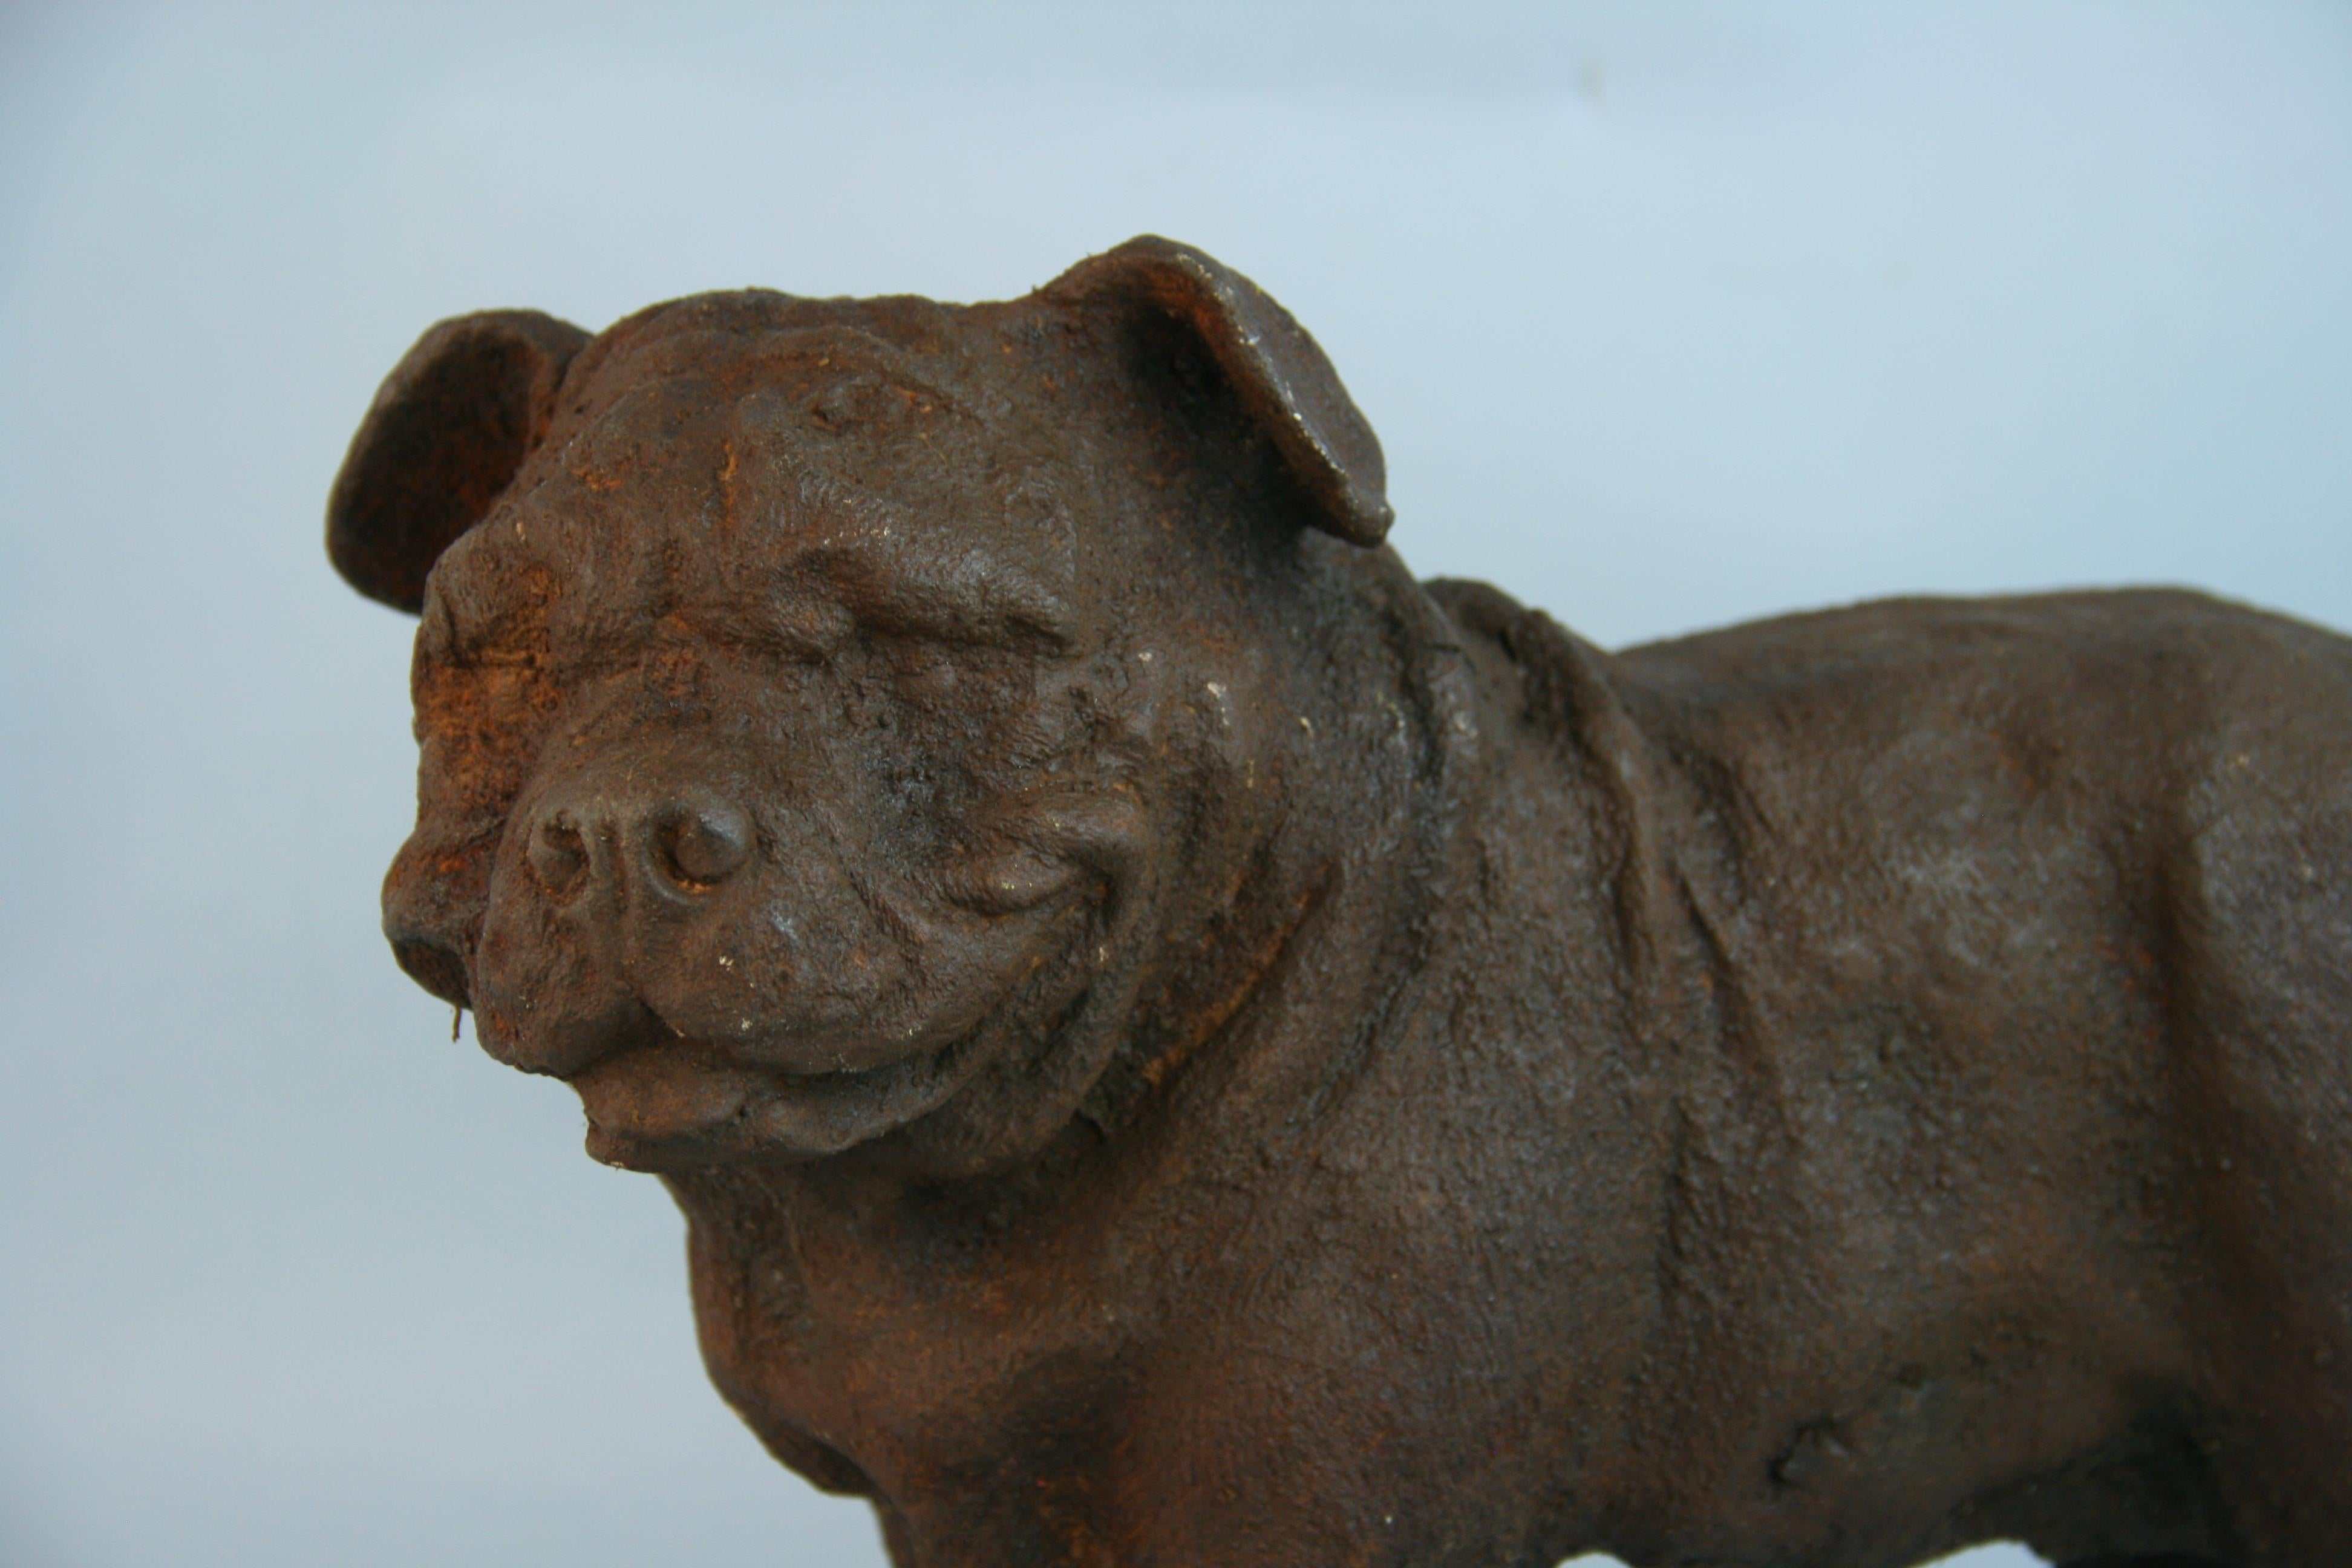 english bulldog sculpture